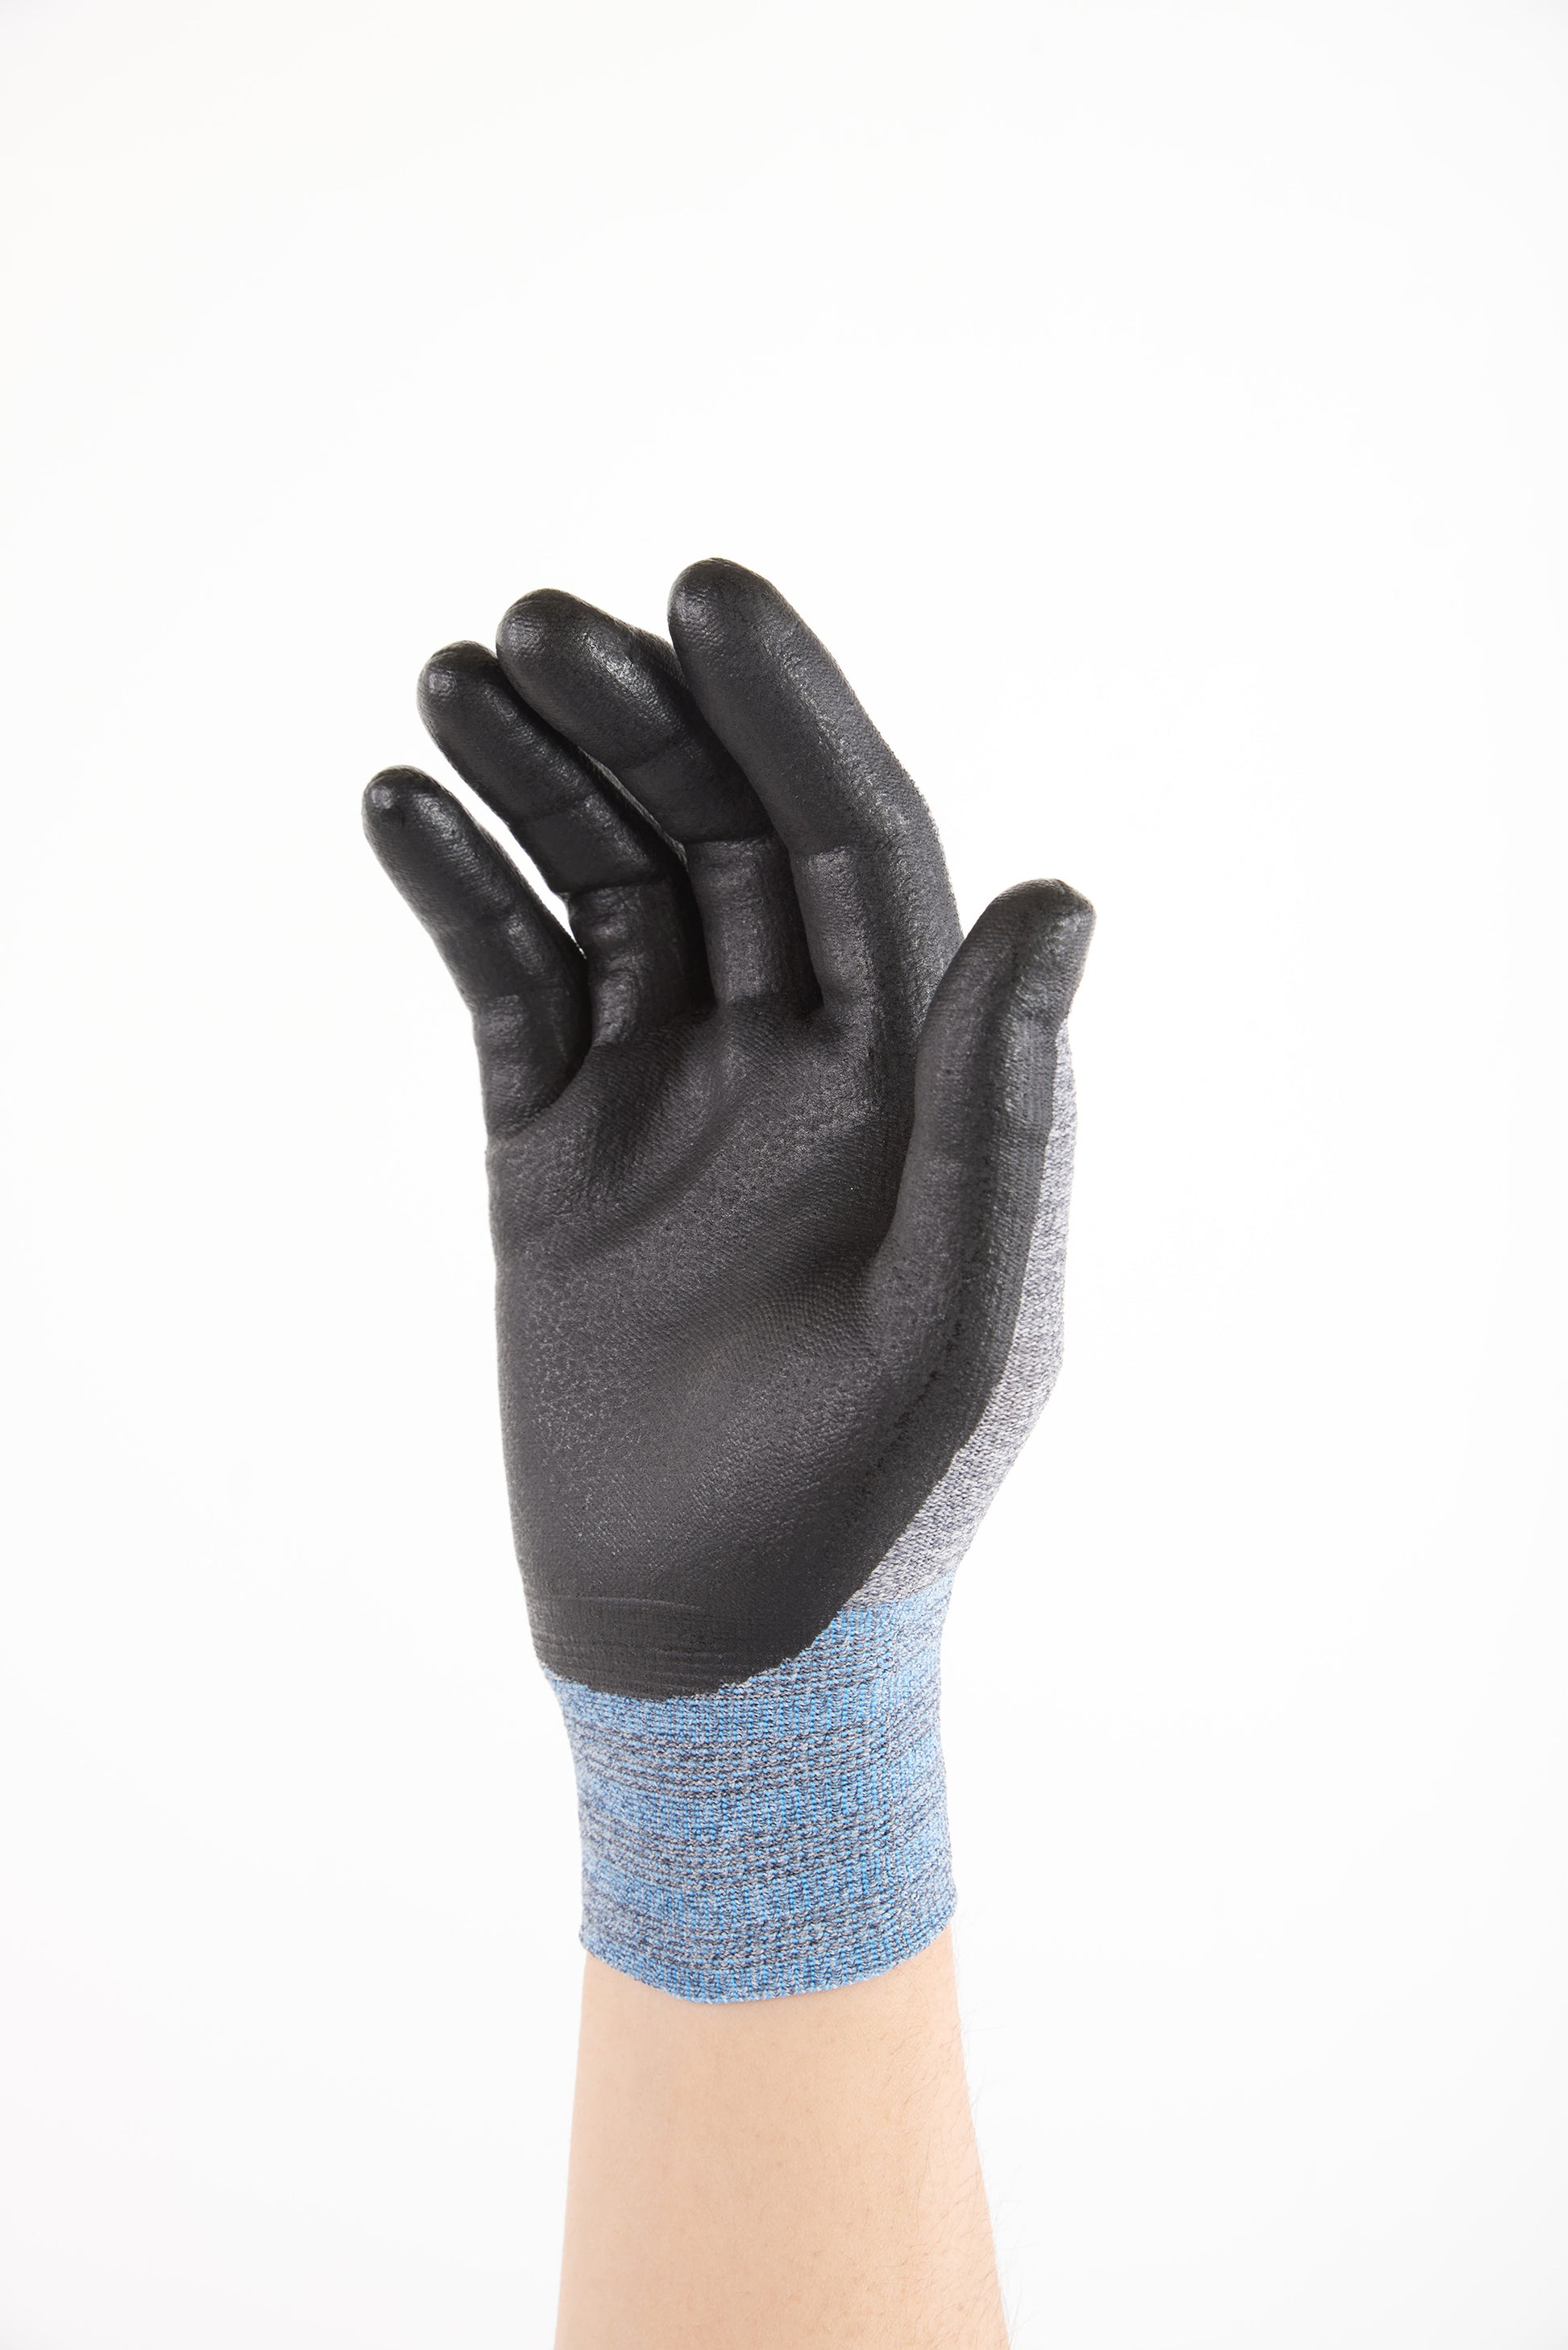 LIO FLEX Level 5 Cut Resistant Gloves - Work Gloves Men & Women, Nitrile  Coated Cut Proof & Touch Screen Compatible, Flexible, Durable Anti Cut  Gloves